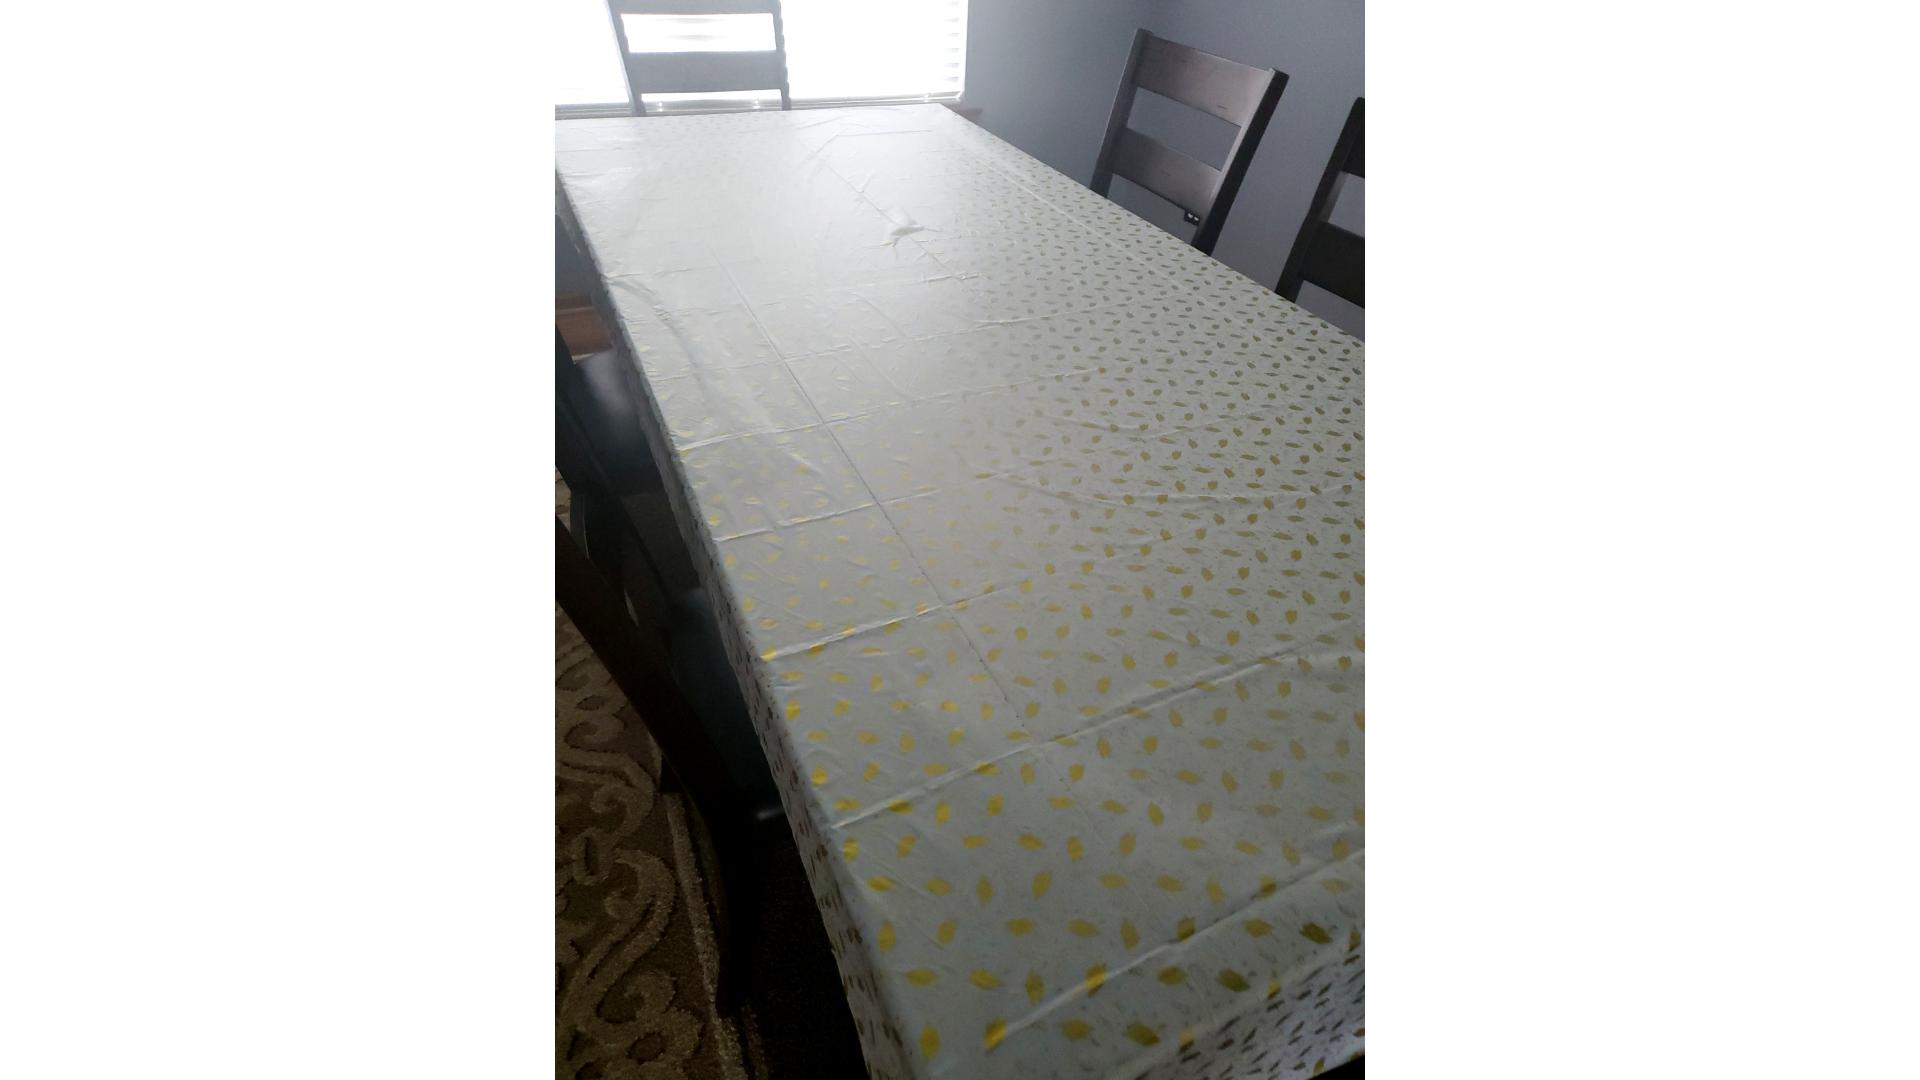 Graduation Gold Grad Hat Plastic Disposable Table Cover 54 X 108 inch – 2 Pieces